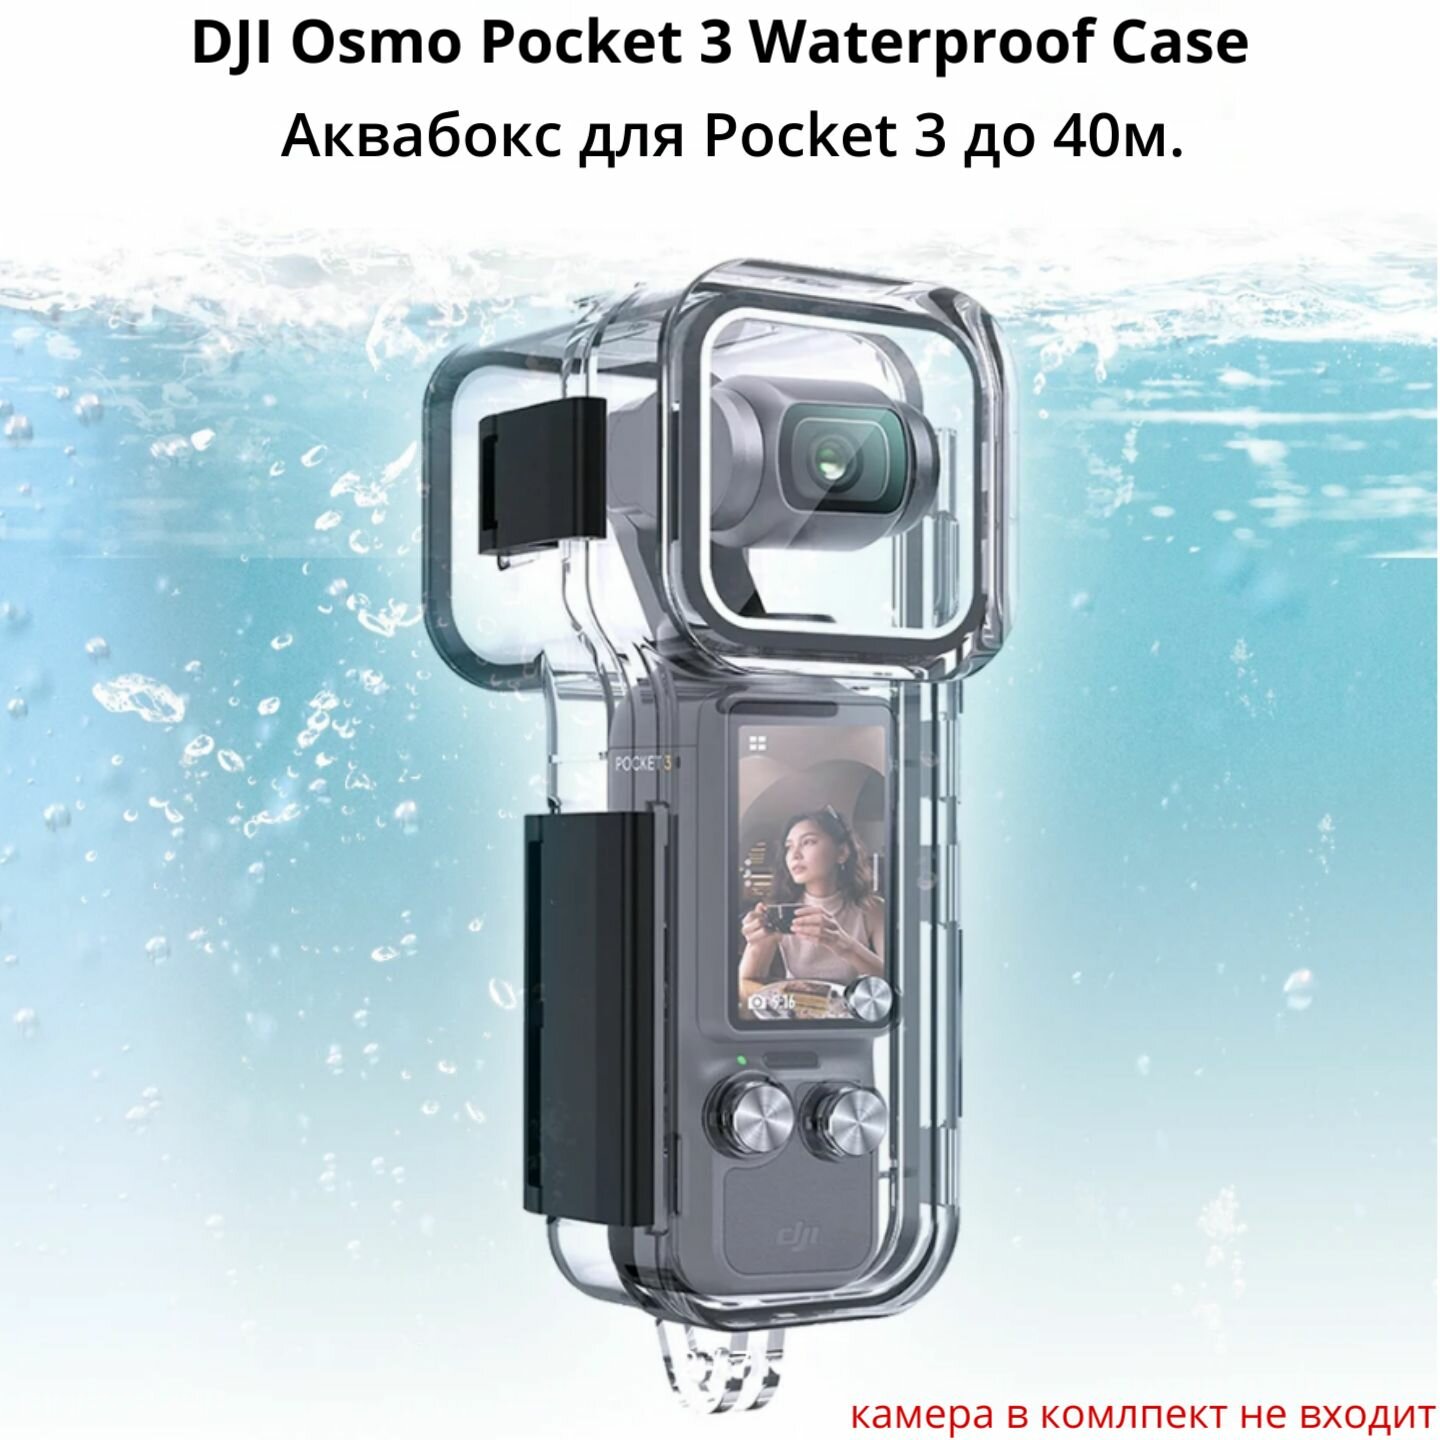 Аквабокс до 40м DJI Osmo Pocket 3 Waterproof Case